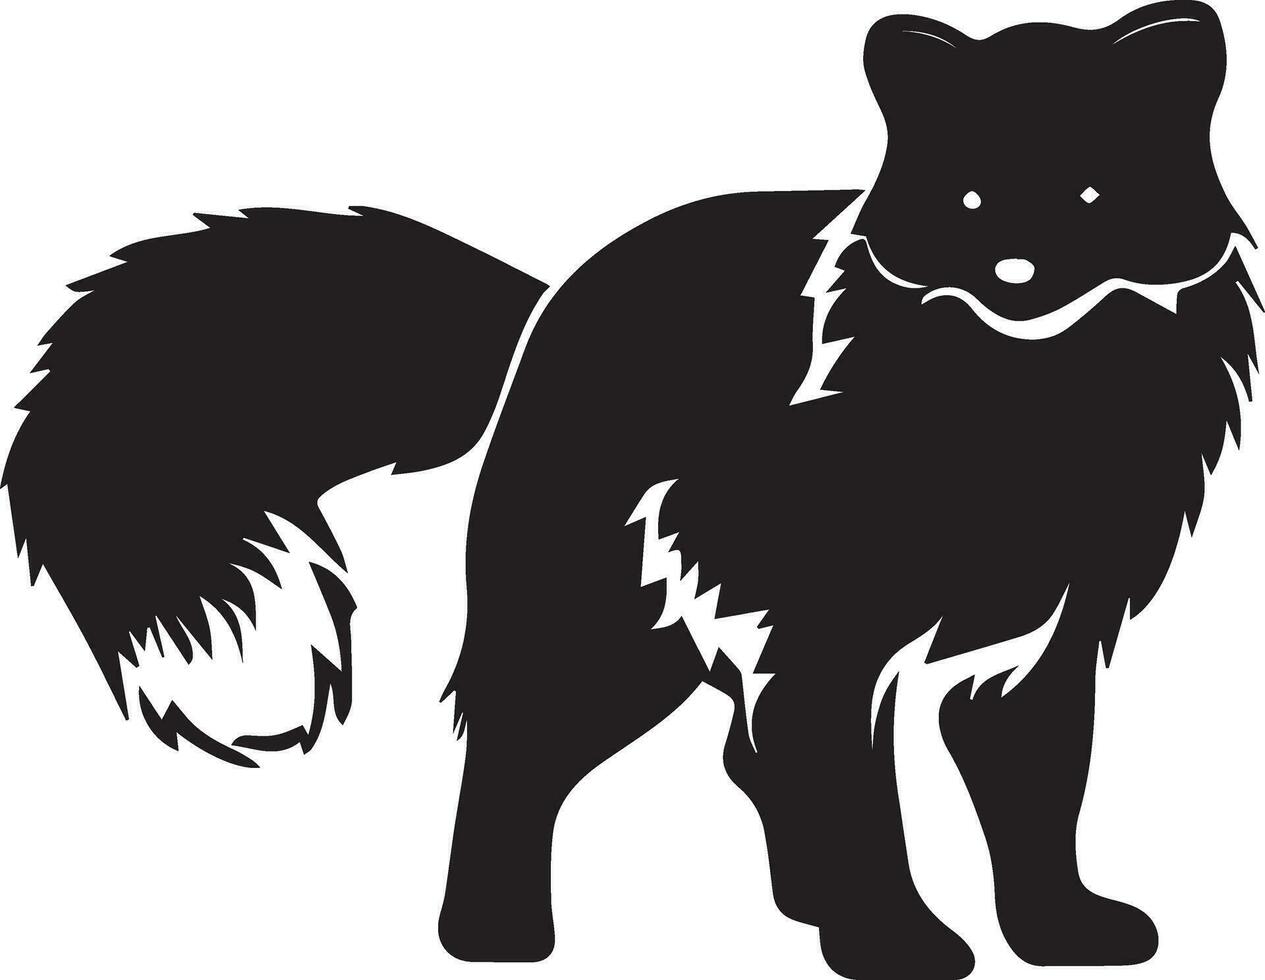 arctisch vos vector silhouet zwart kleur